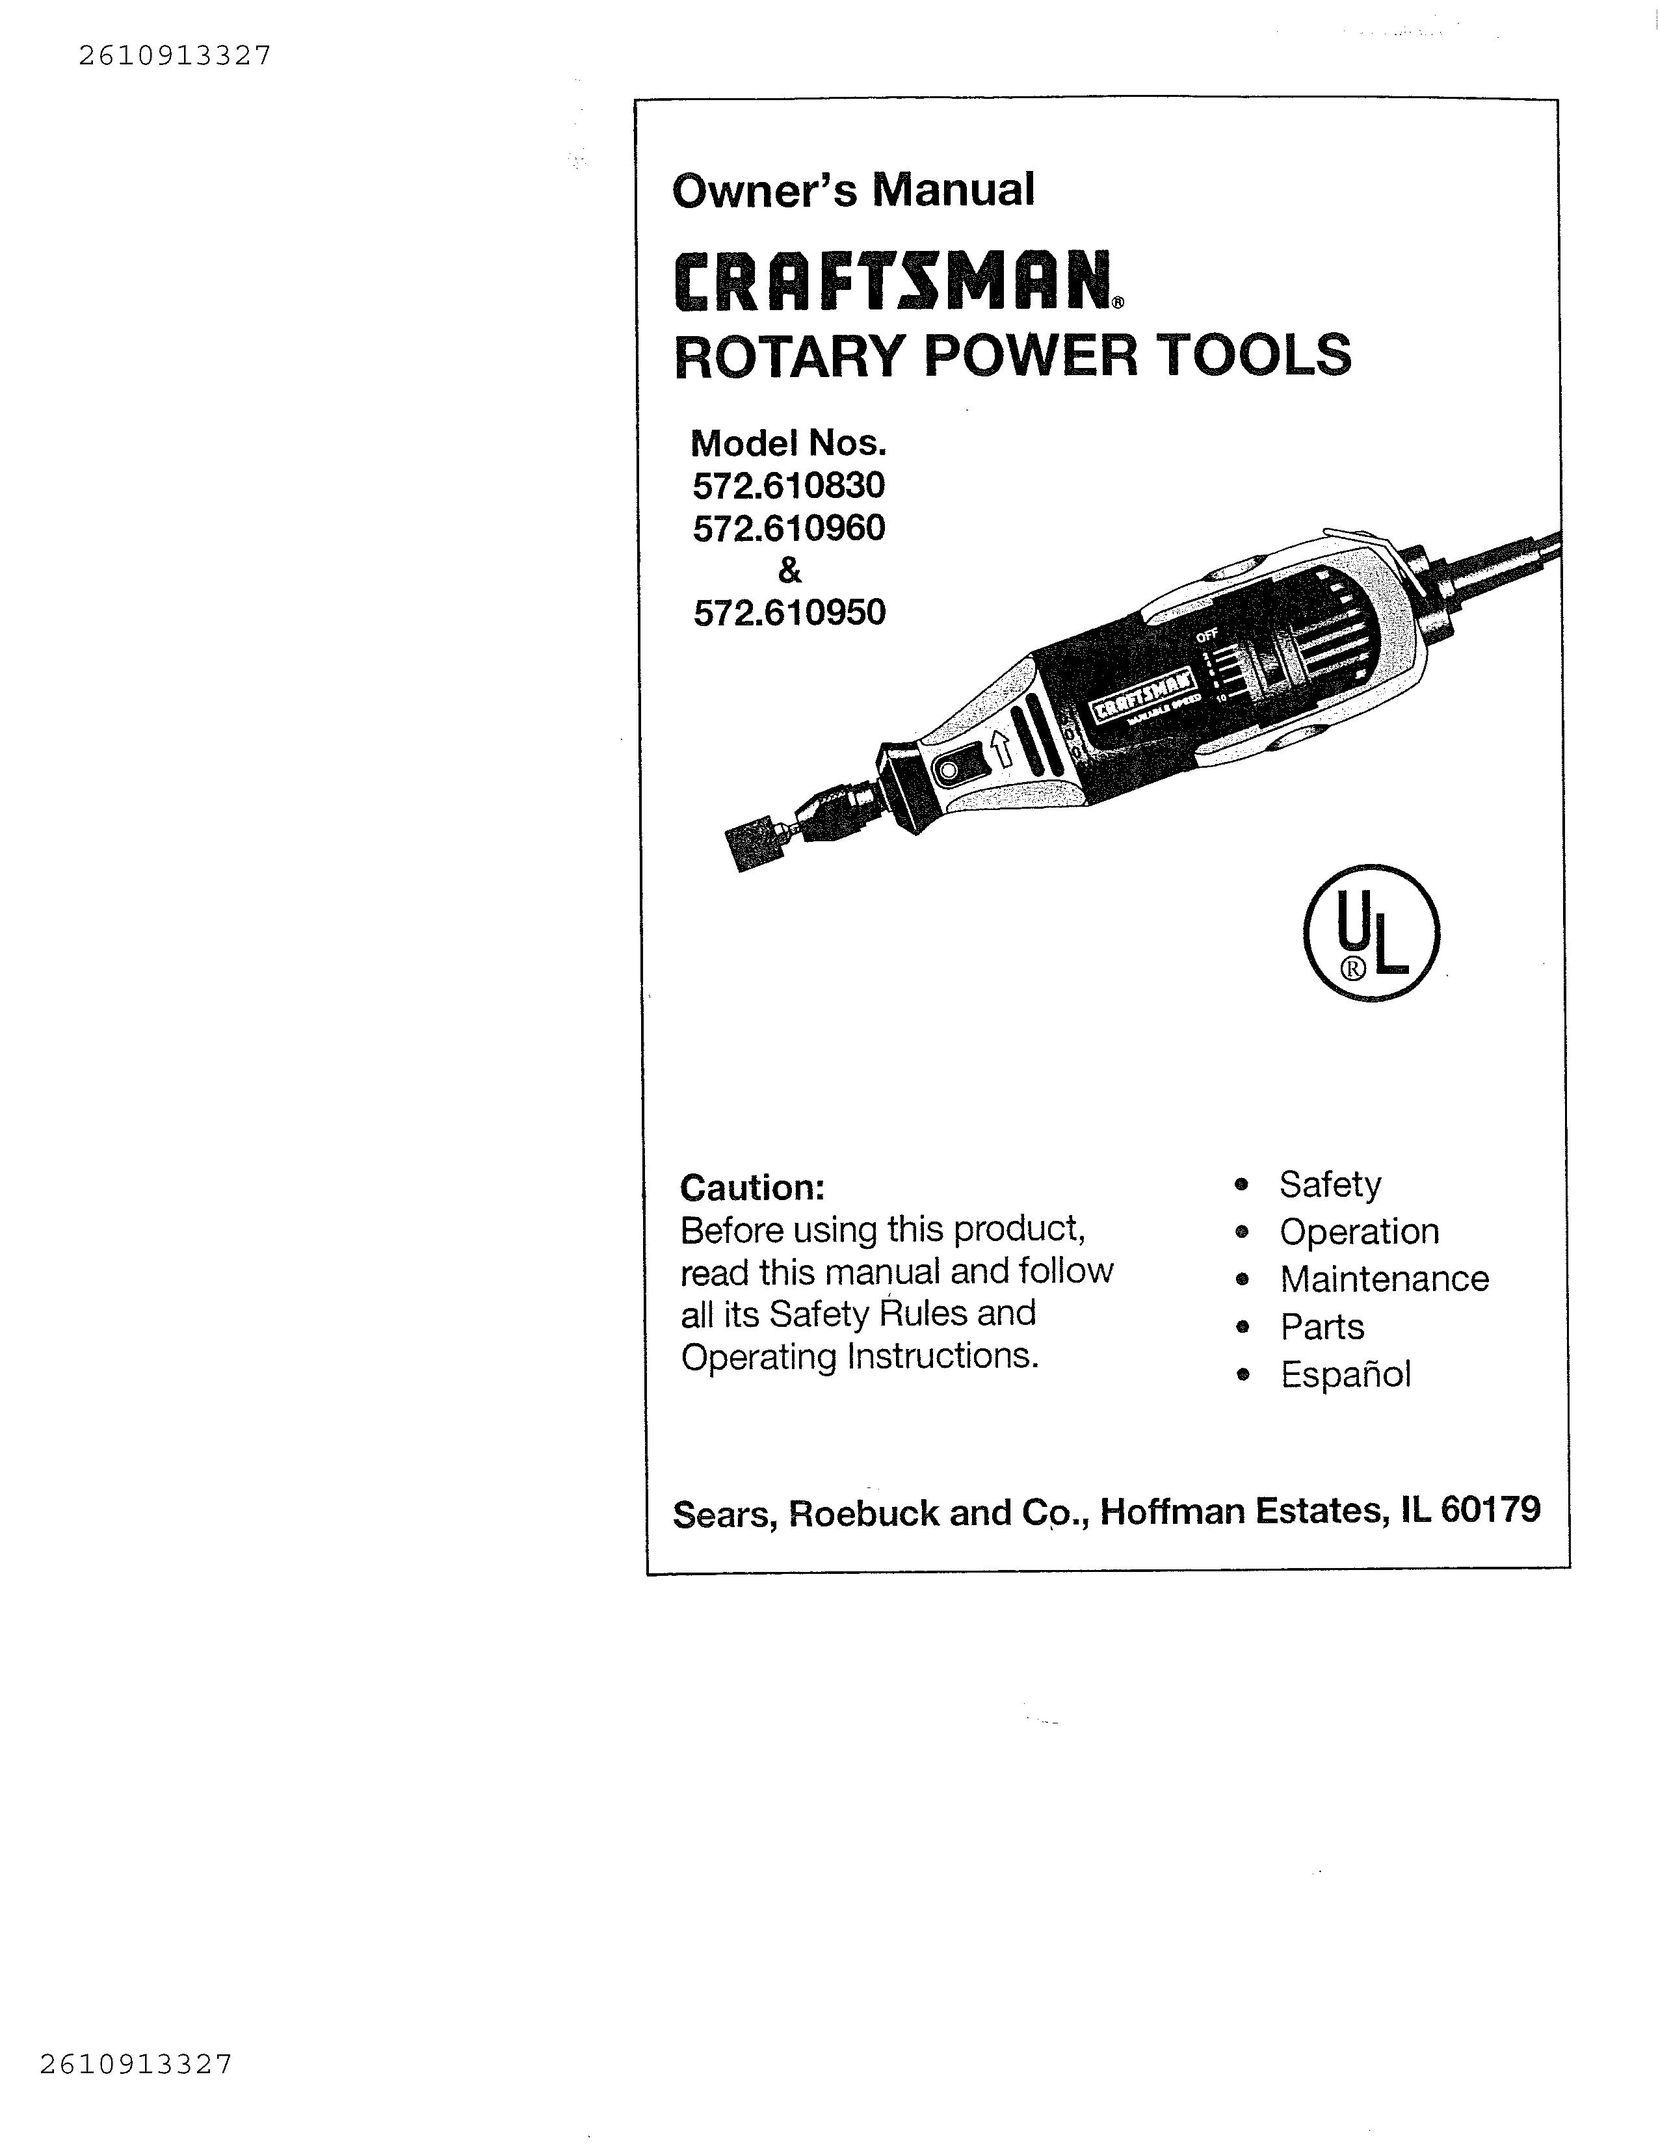 Craftsman 572.61095 Power Hammer User Manual